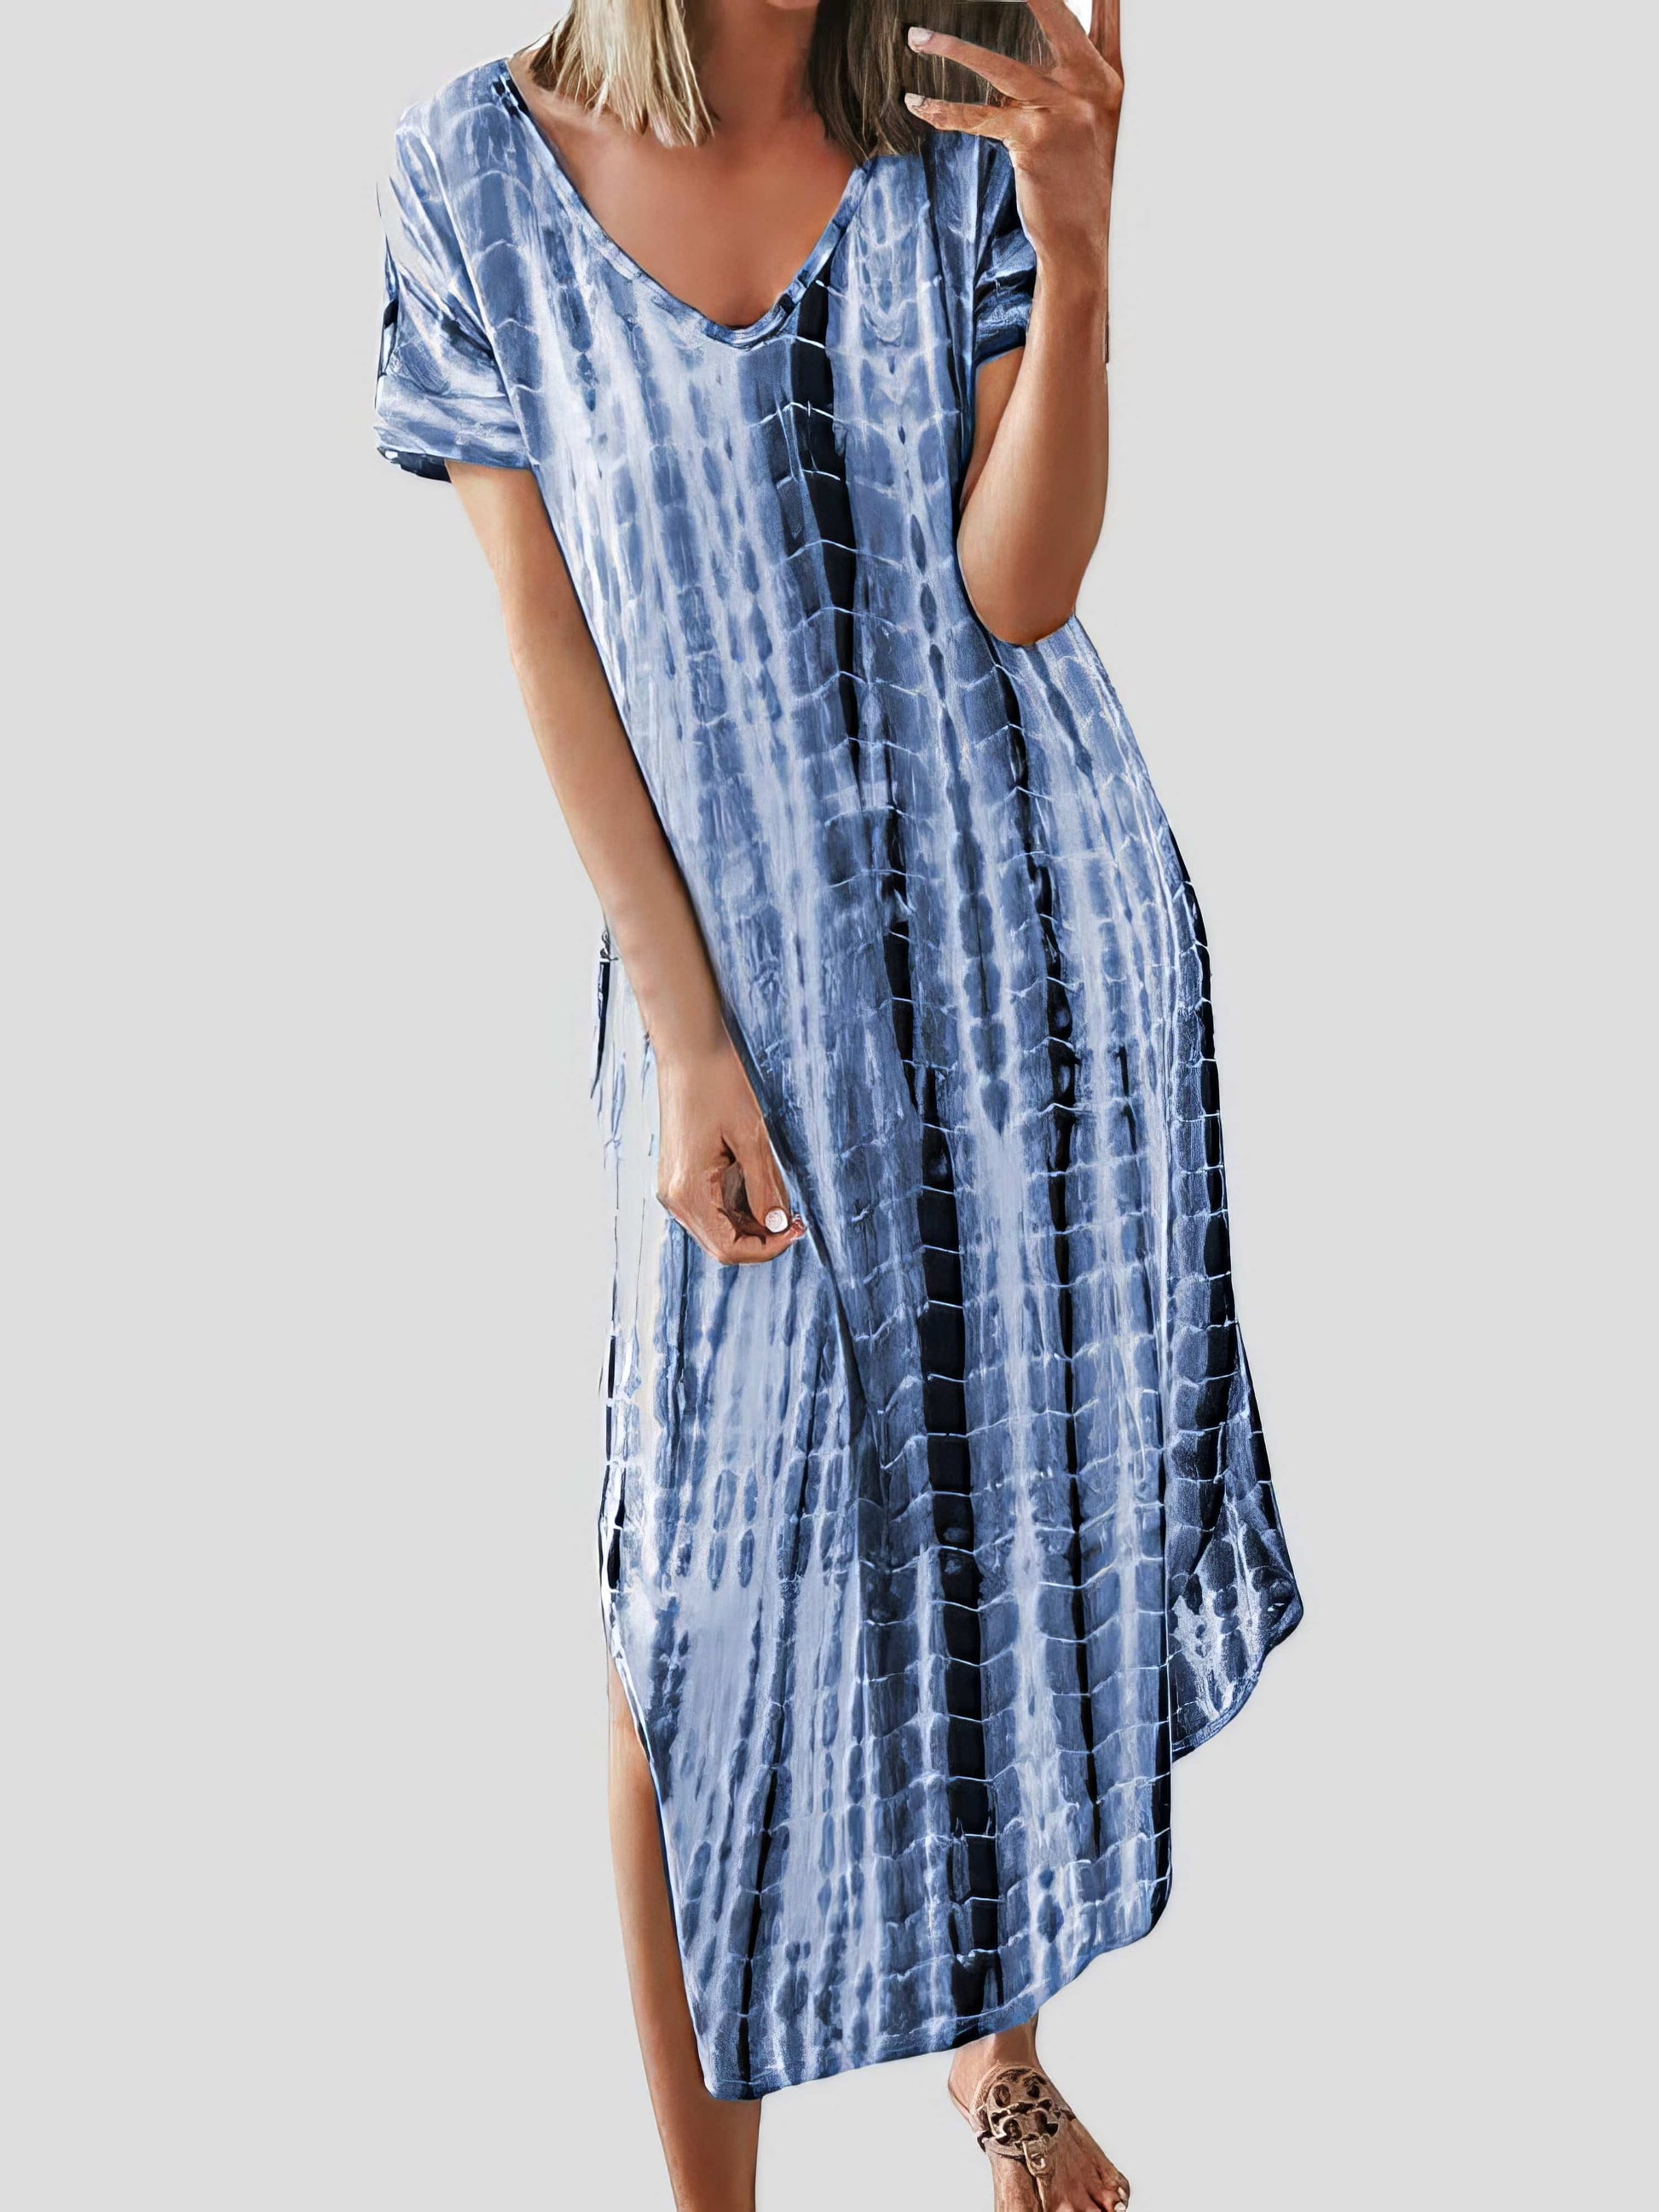 MsDressly Maxi Dresses Loose Tie-Dye Printed V-Neck Split Dress DRE2107121865BLUS